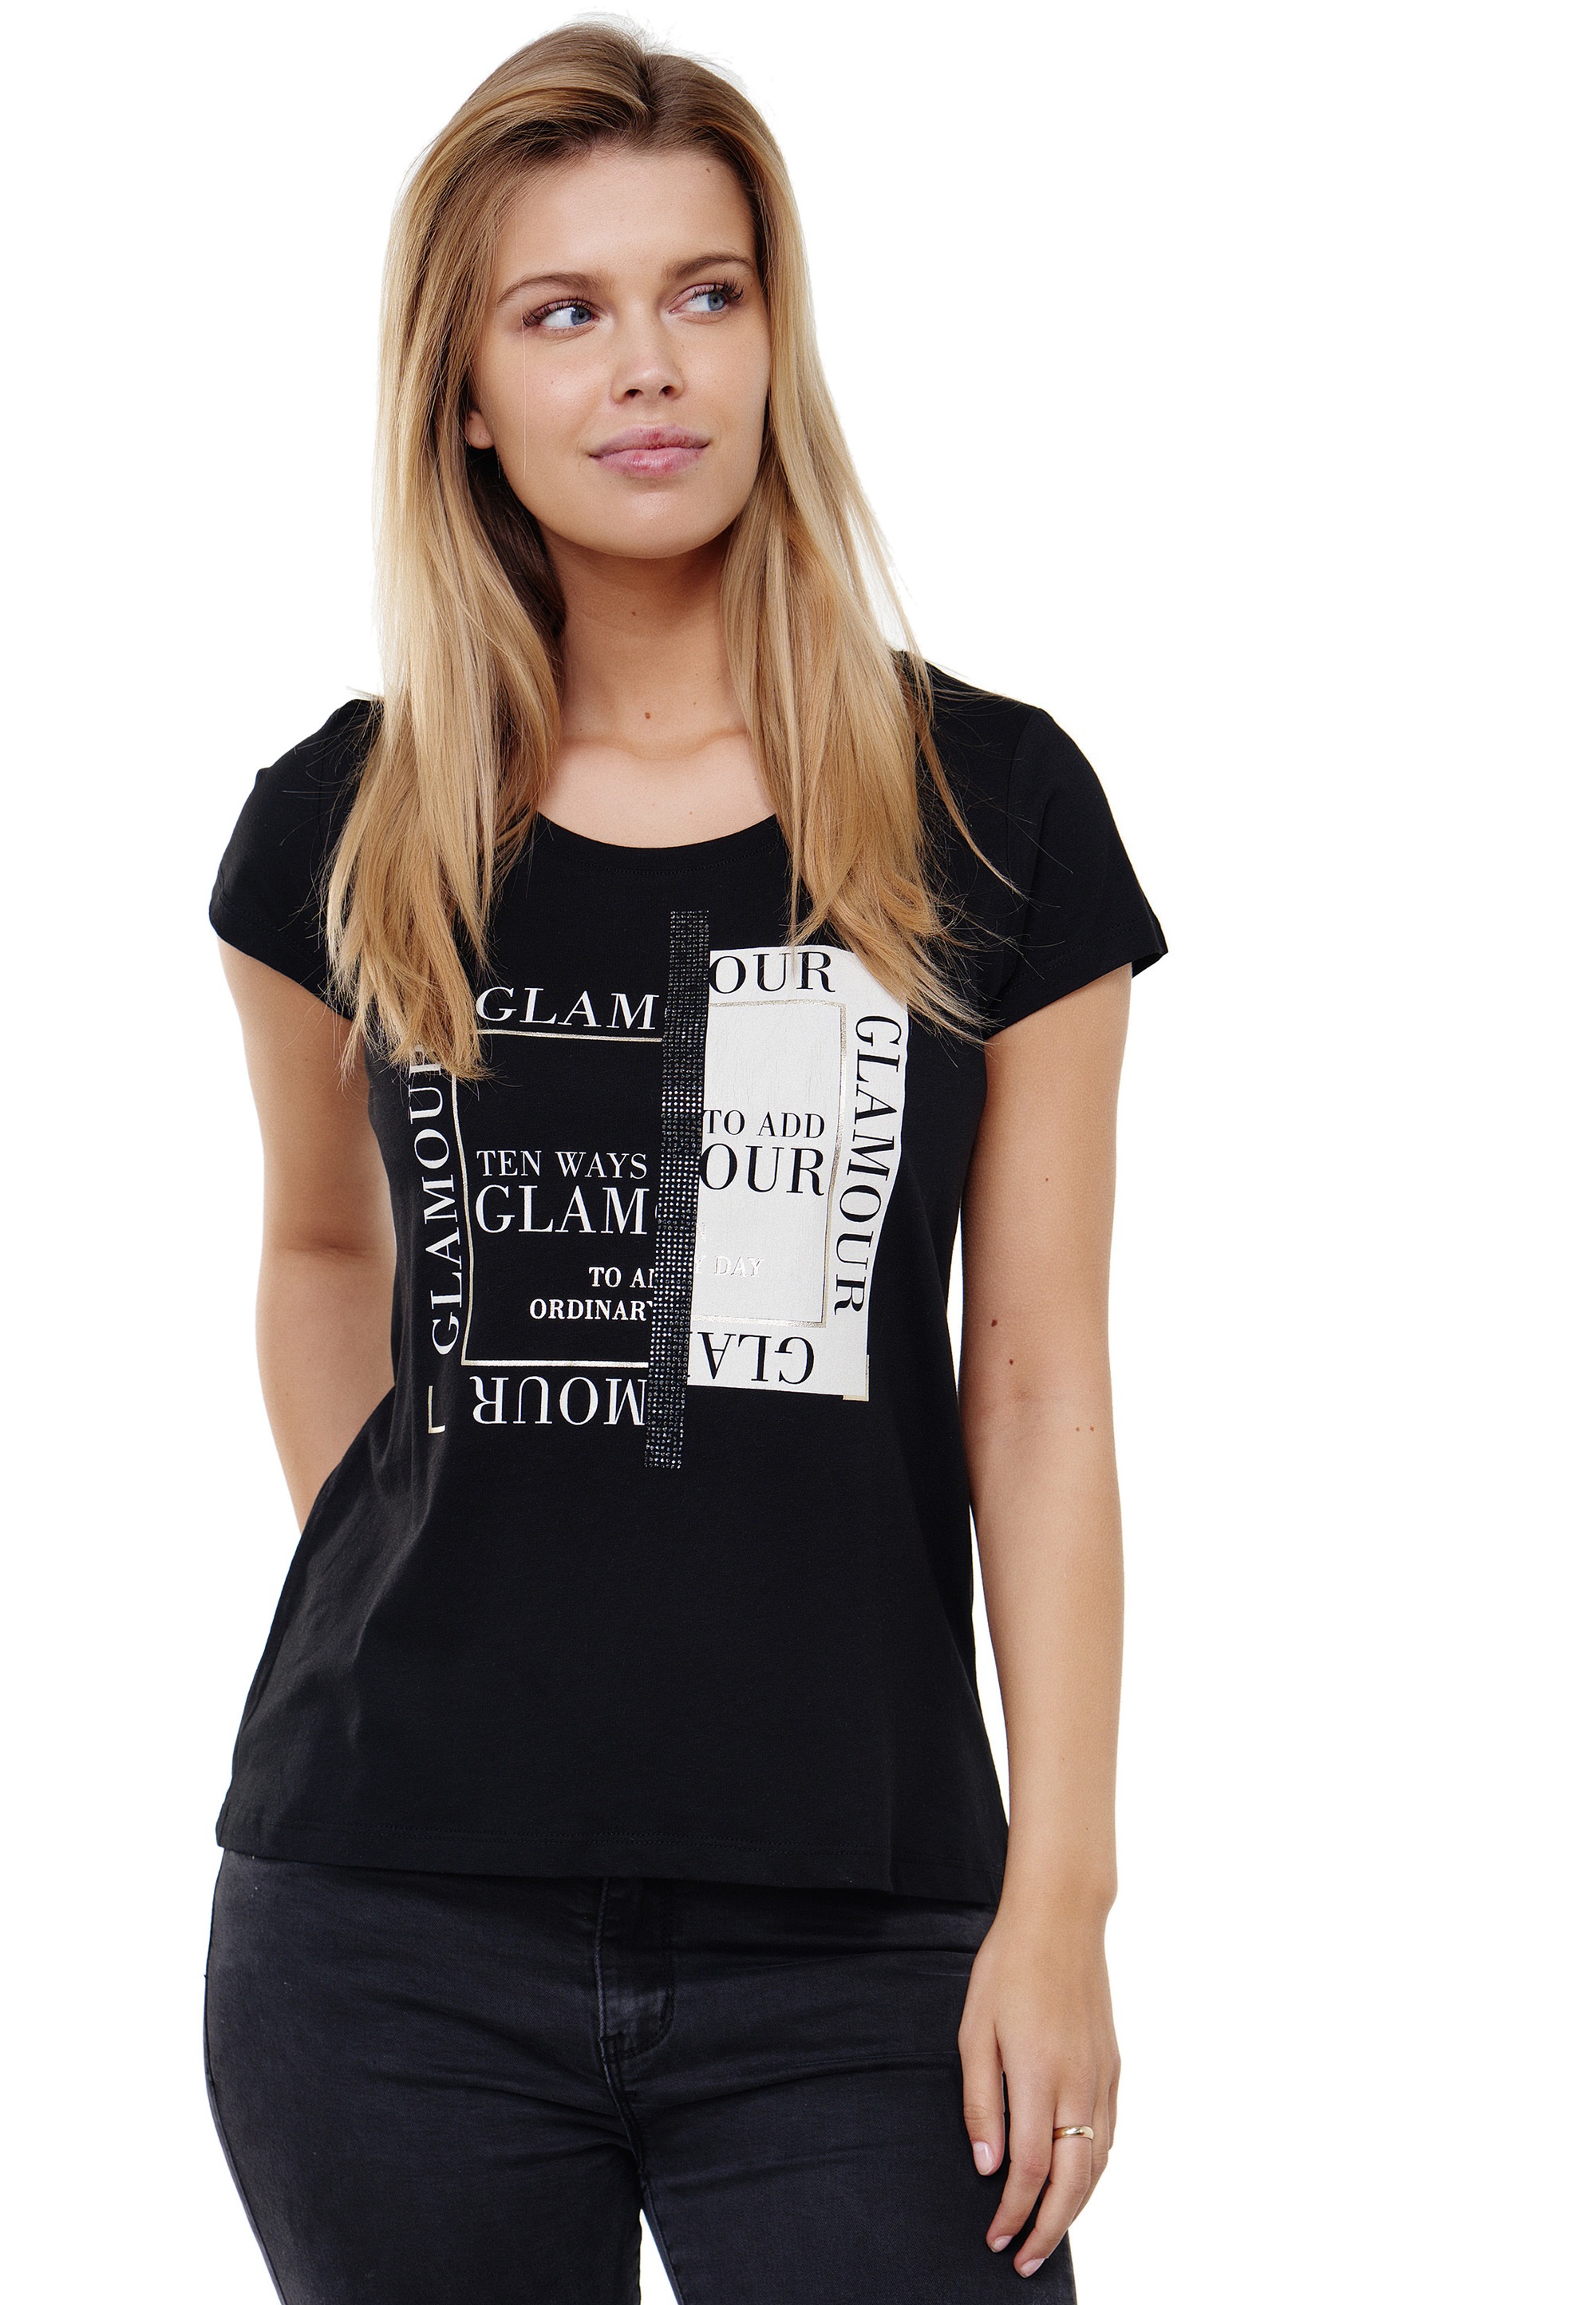 Decay Brustprint BAUR modernem T-Shirt, | mit kaufen